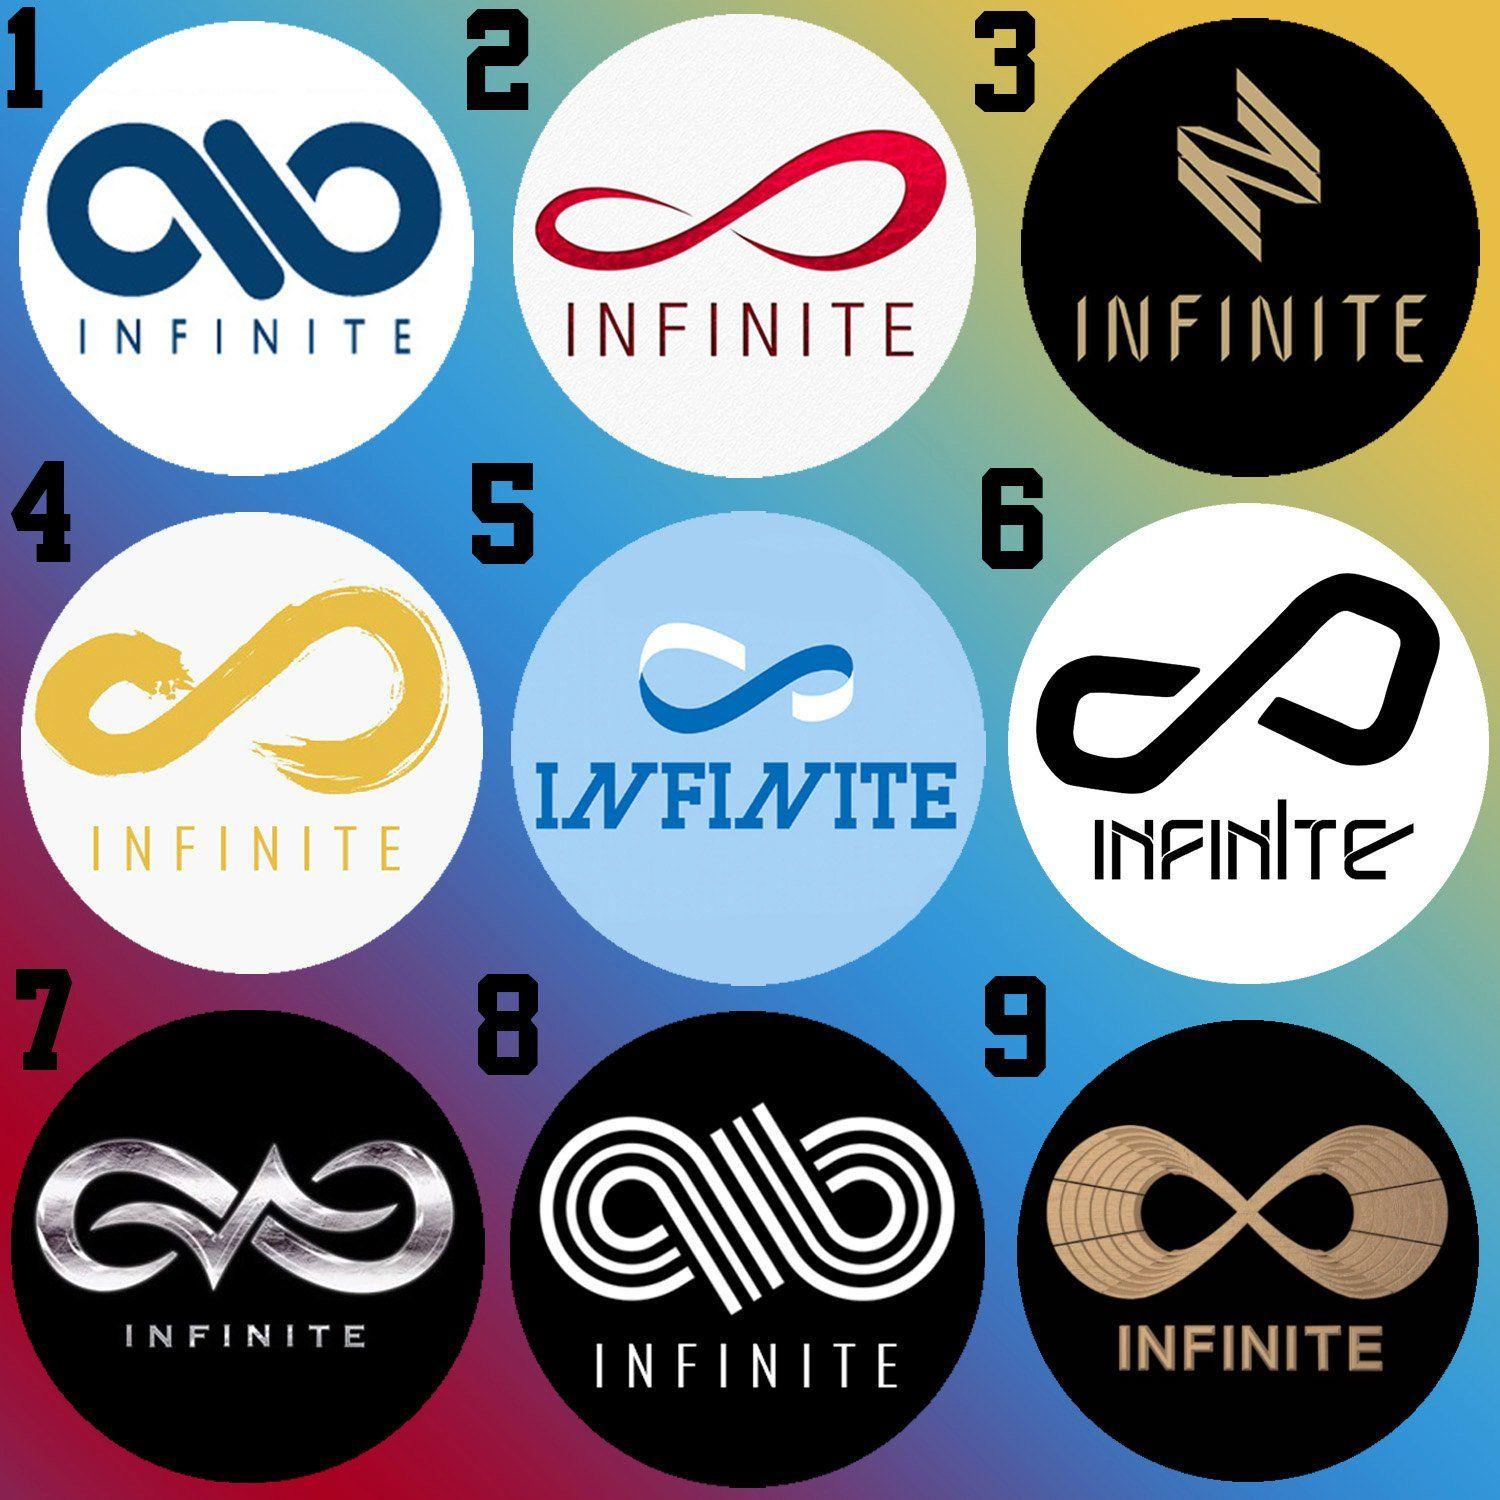 Infinite Kpop Logo - Unique logos of idol groups - Page 2 - Netizen Nation - OneHallyu